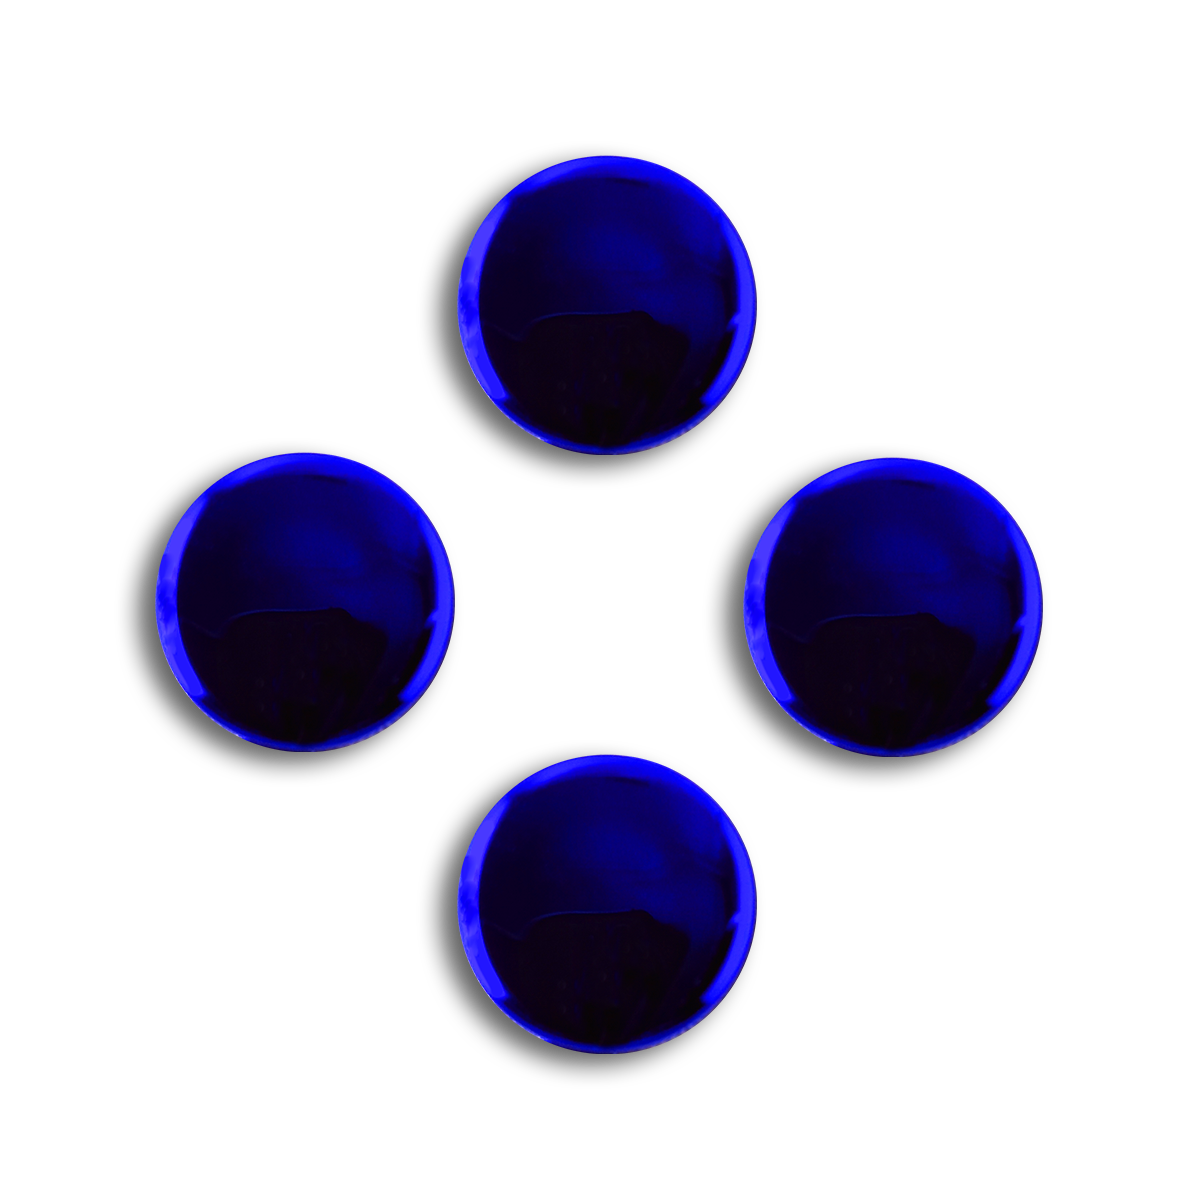 boutons-ps4-custom-manette-personnalisee-drawmypad-chrome-bleu